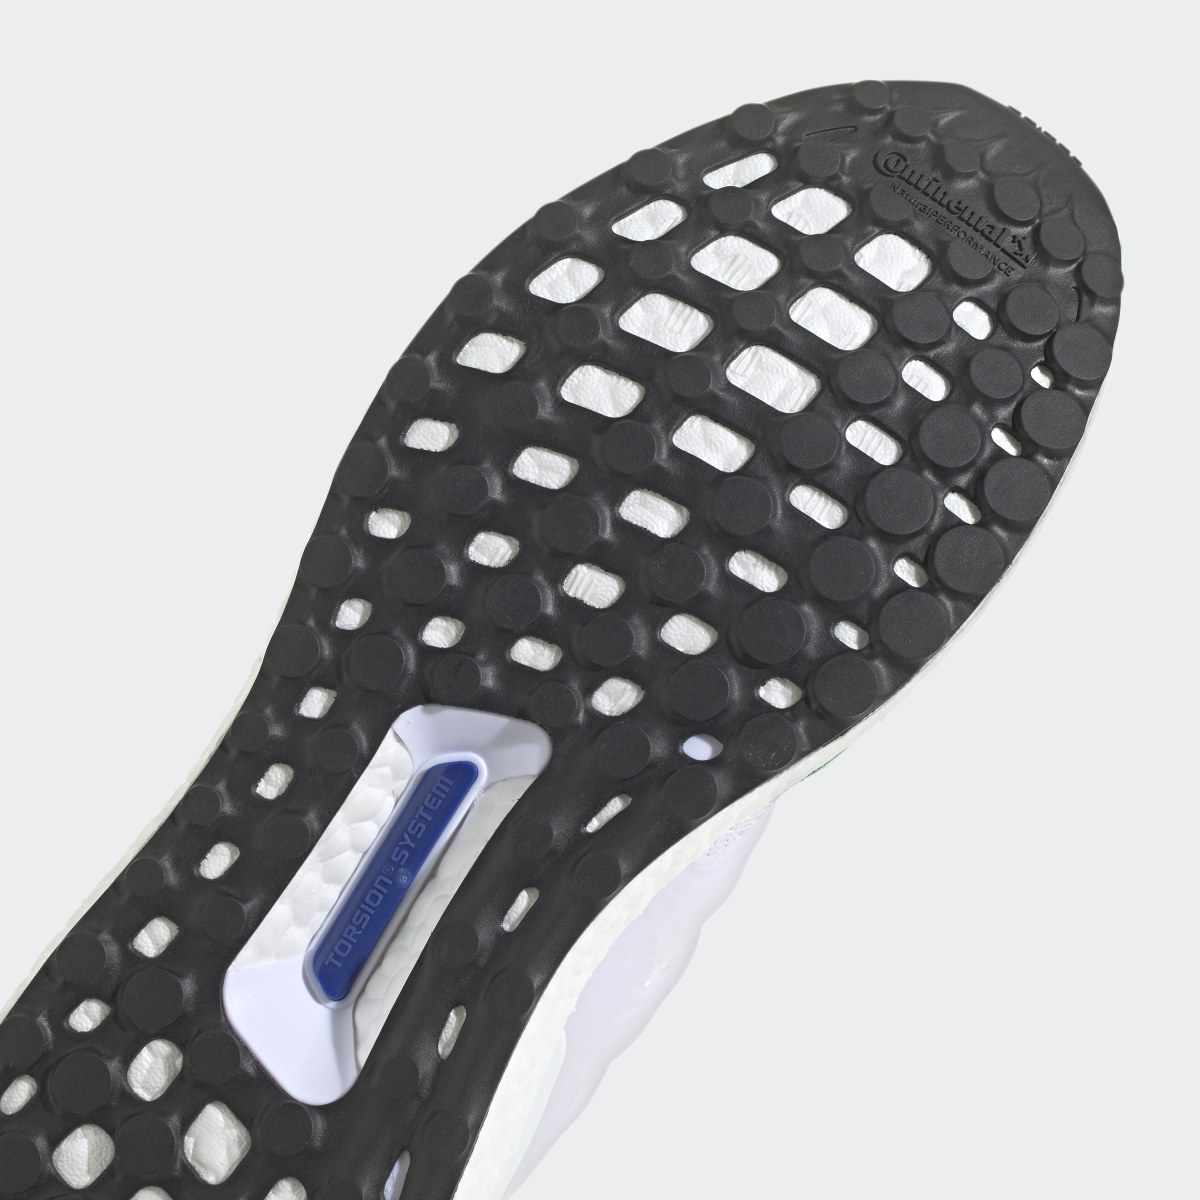 Adidas Ultraboost 1.0 DNA Running Sportswear Lifestyle Shoes. 4